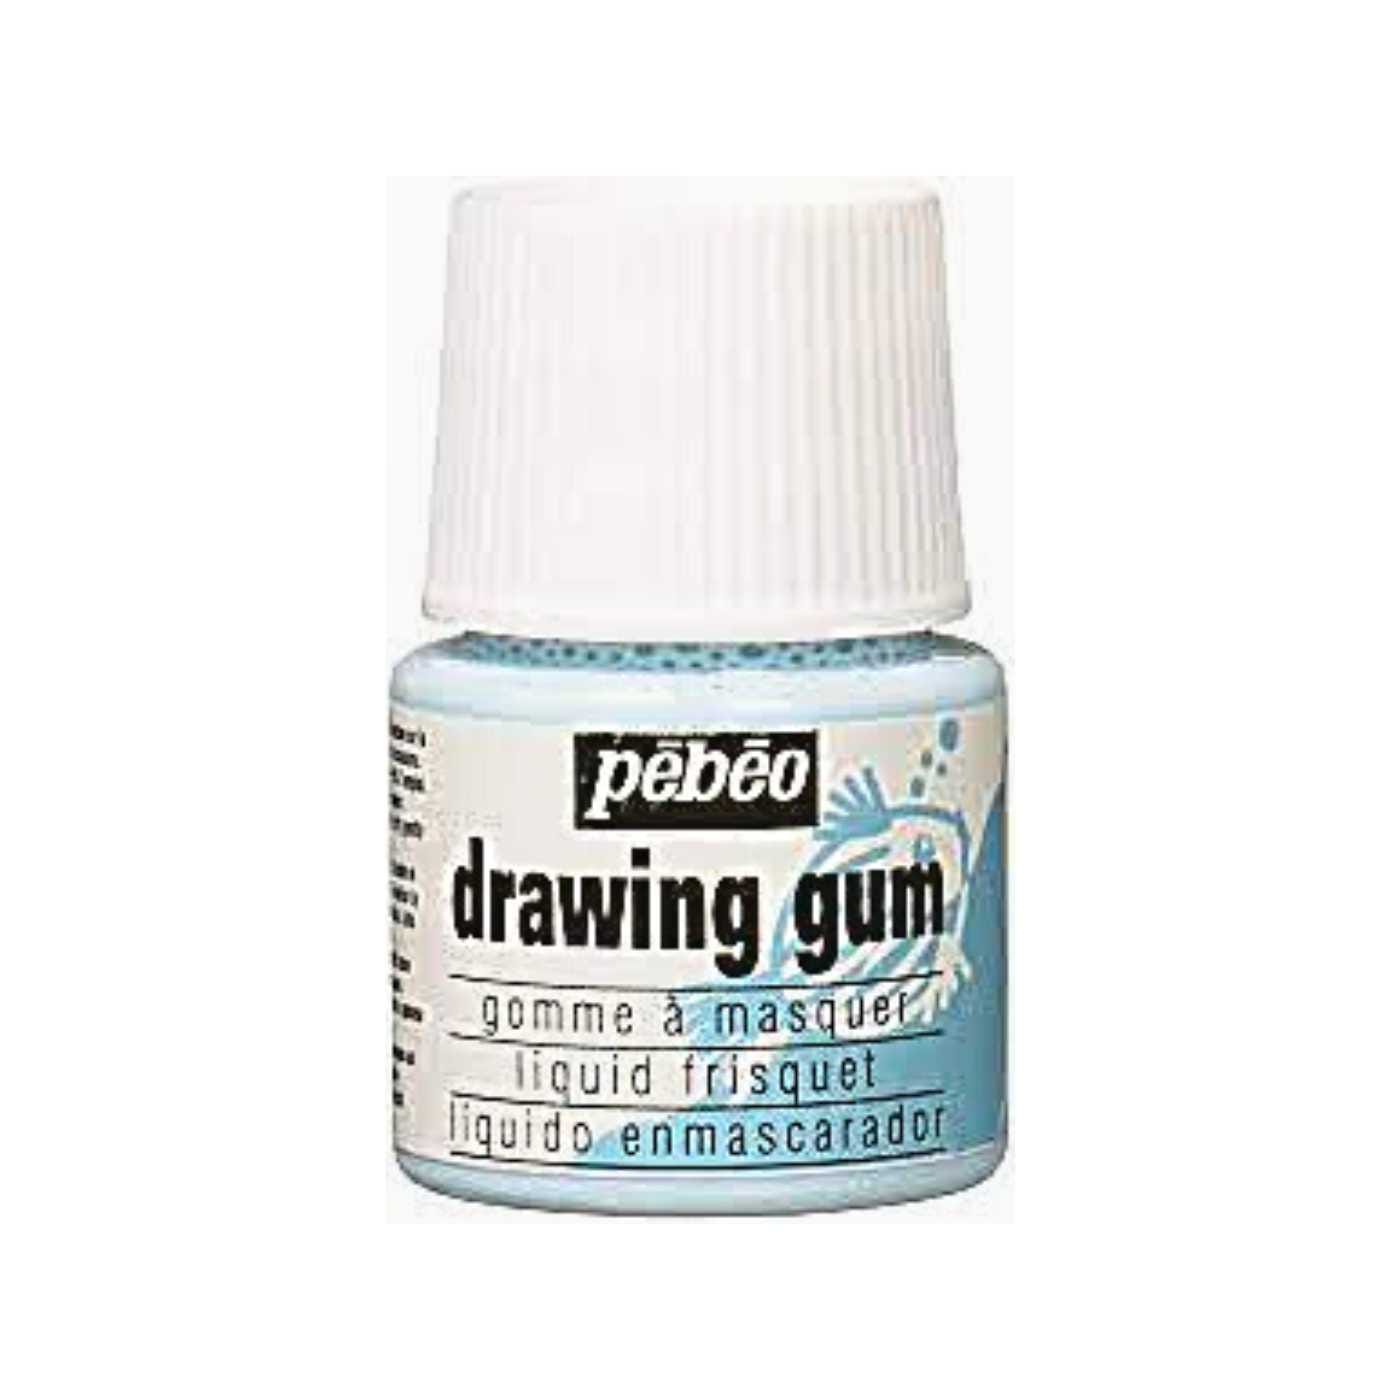 Drawing Gum 45 ml, bottle